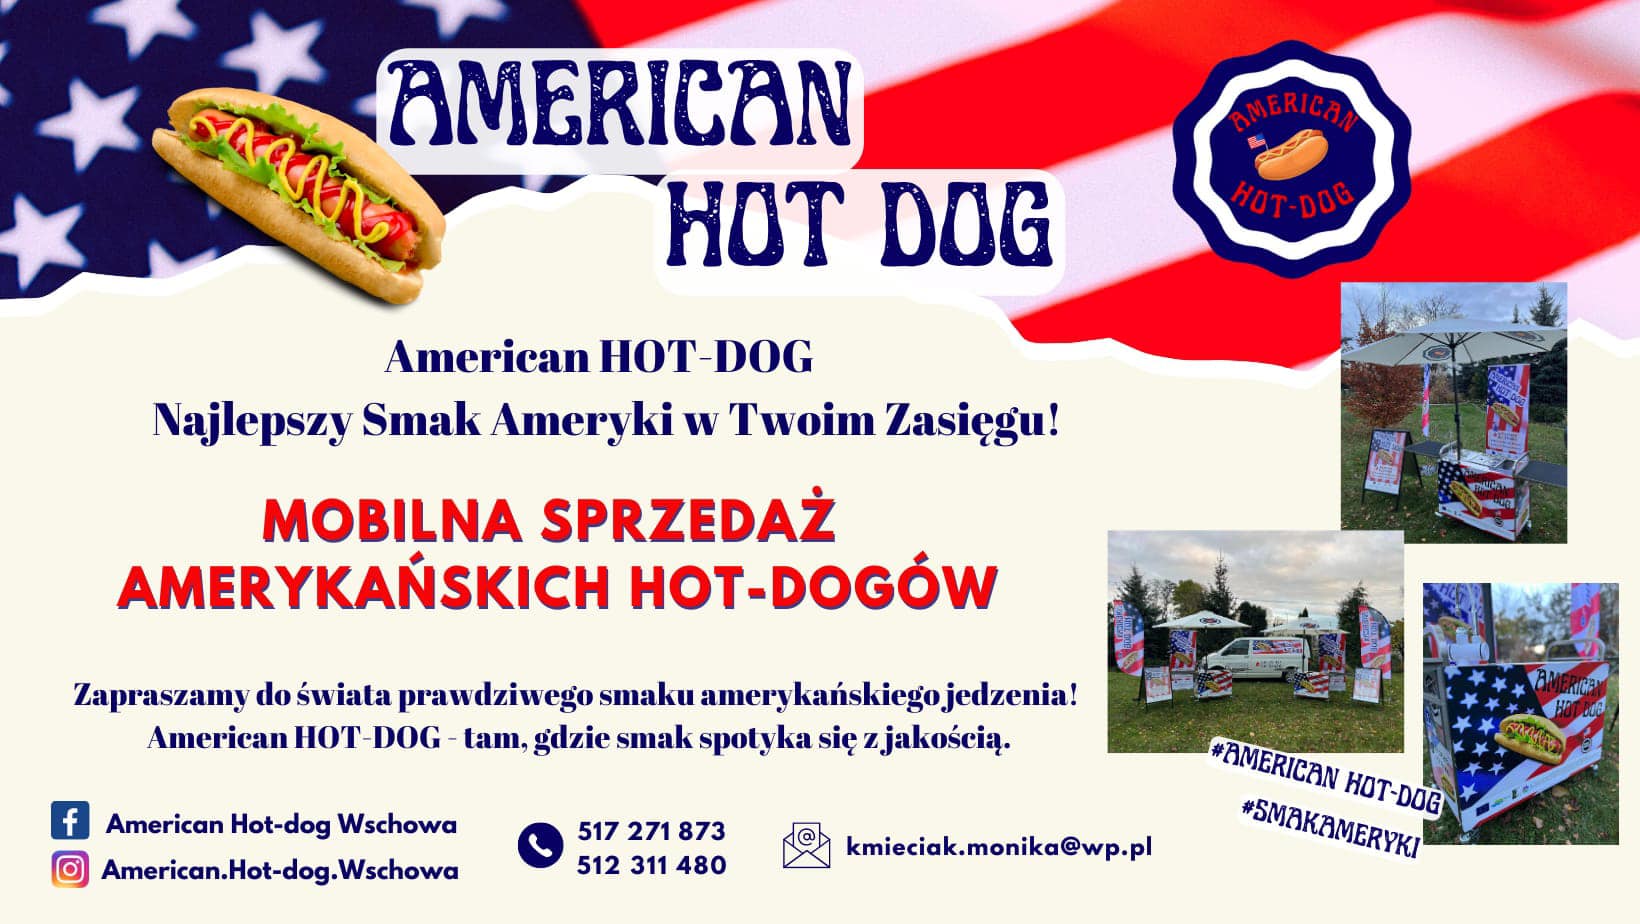 American Hot-Dog Wschowa